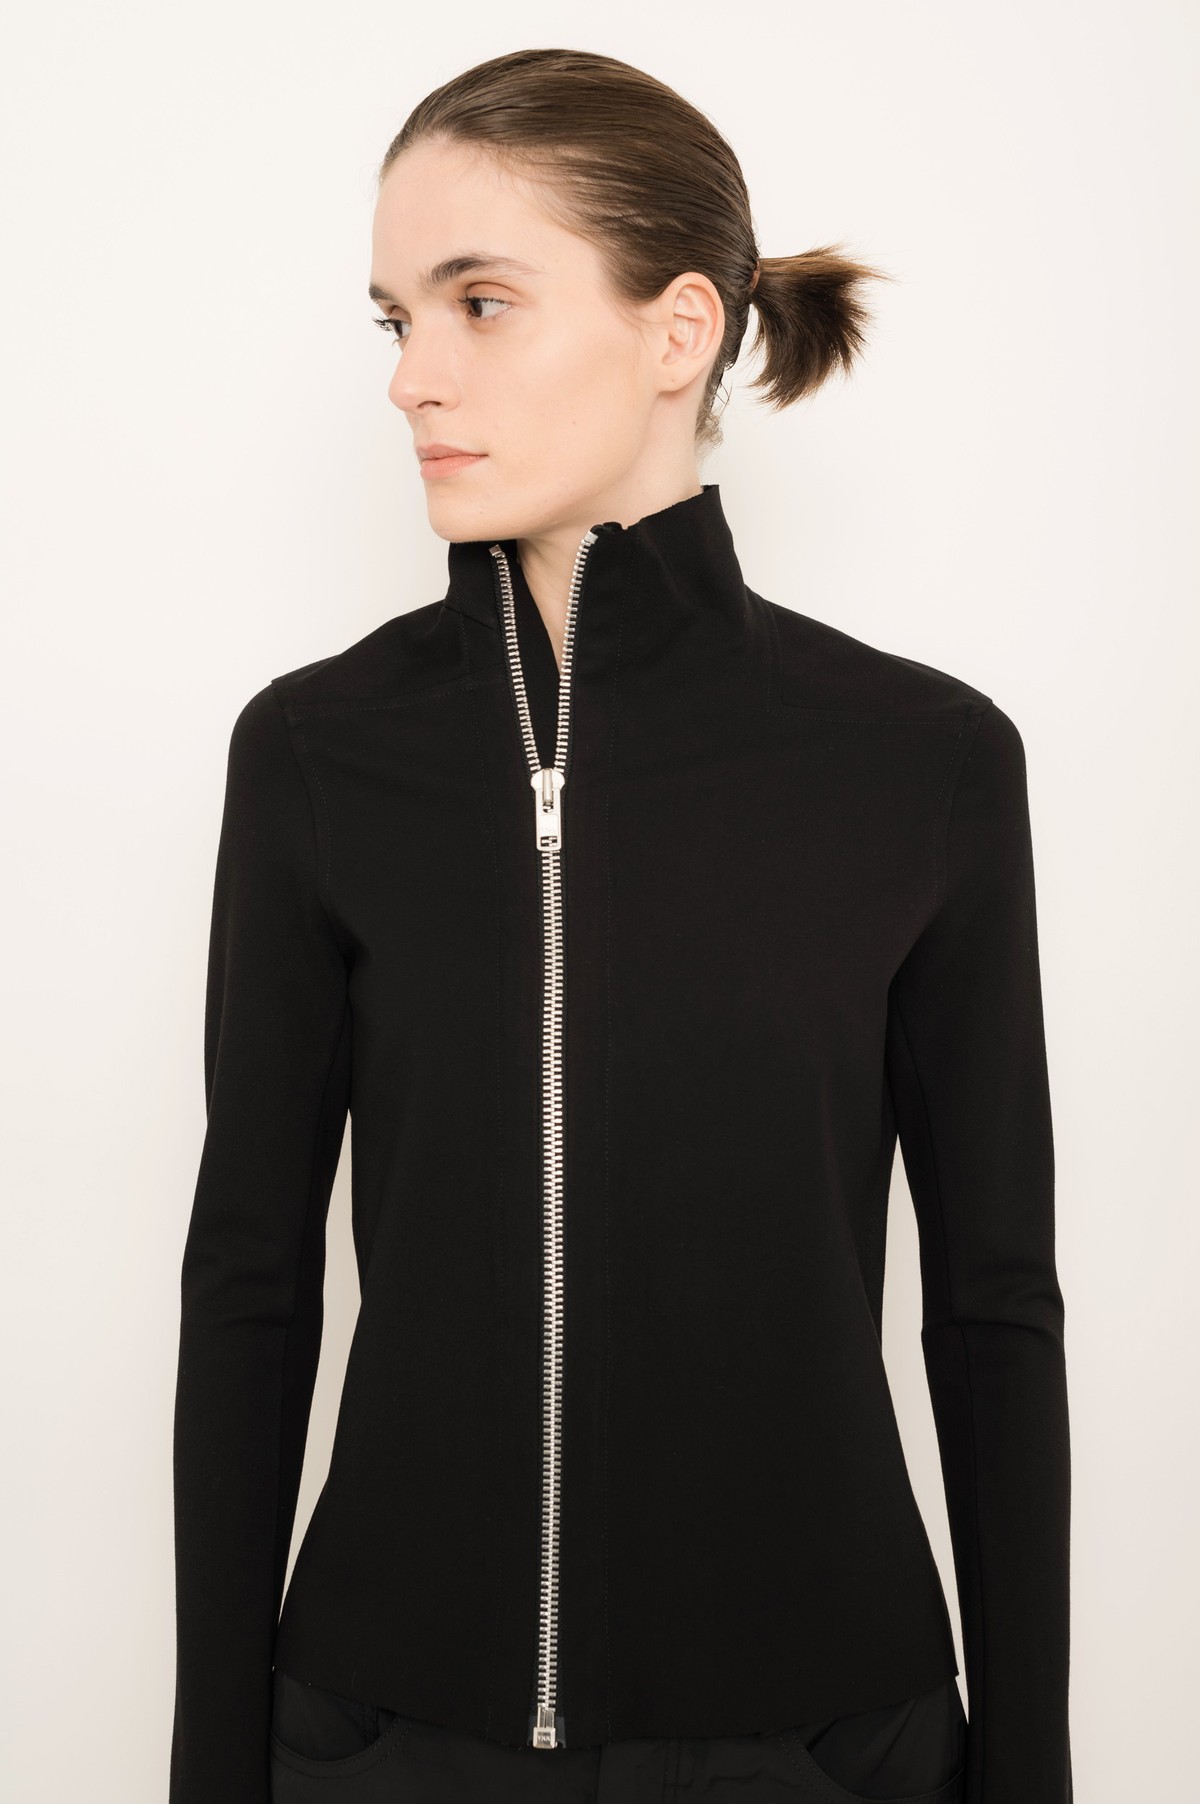 jaqueta assimétrica em malha compacta | asymmetric compact jersey jacket